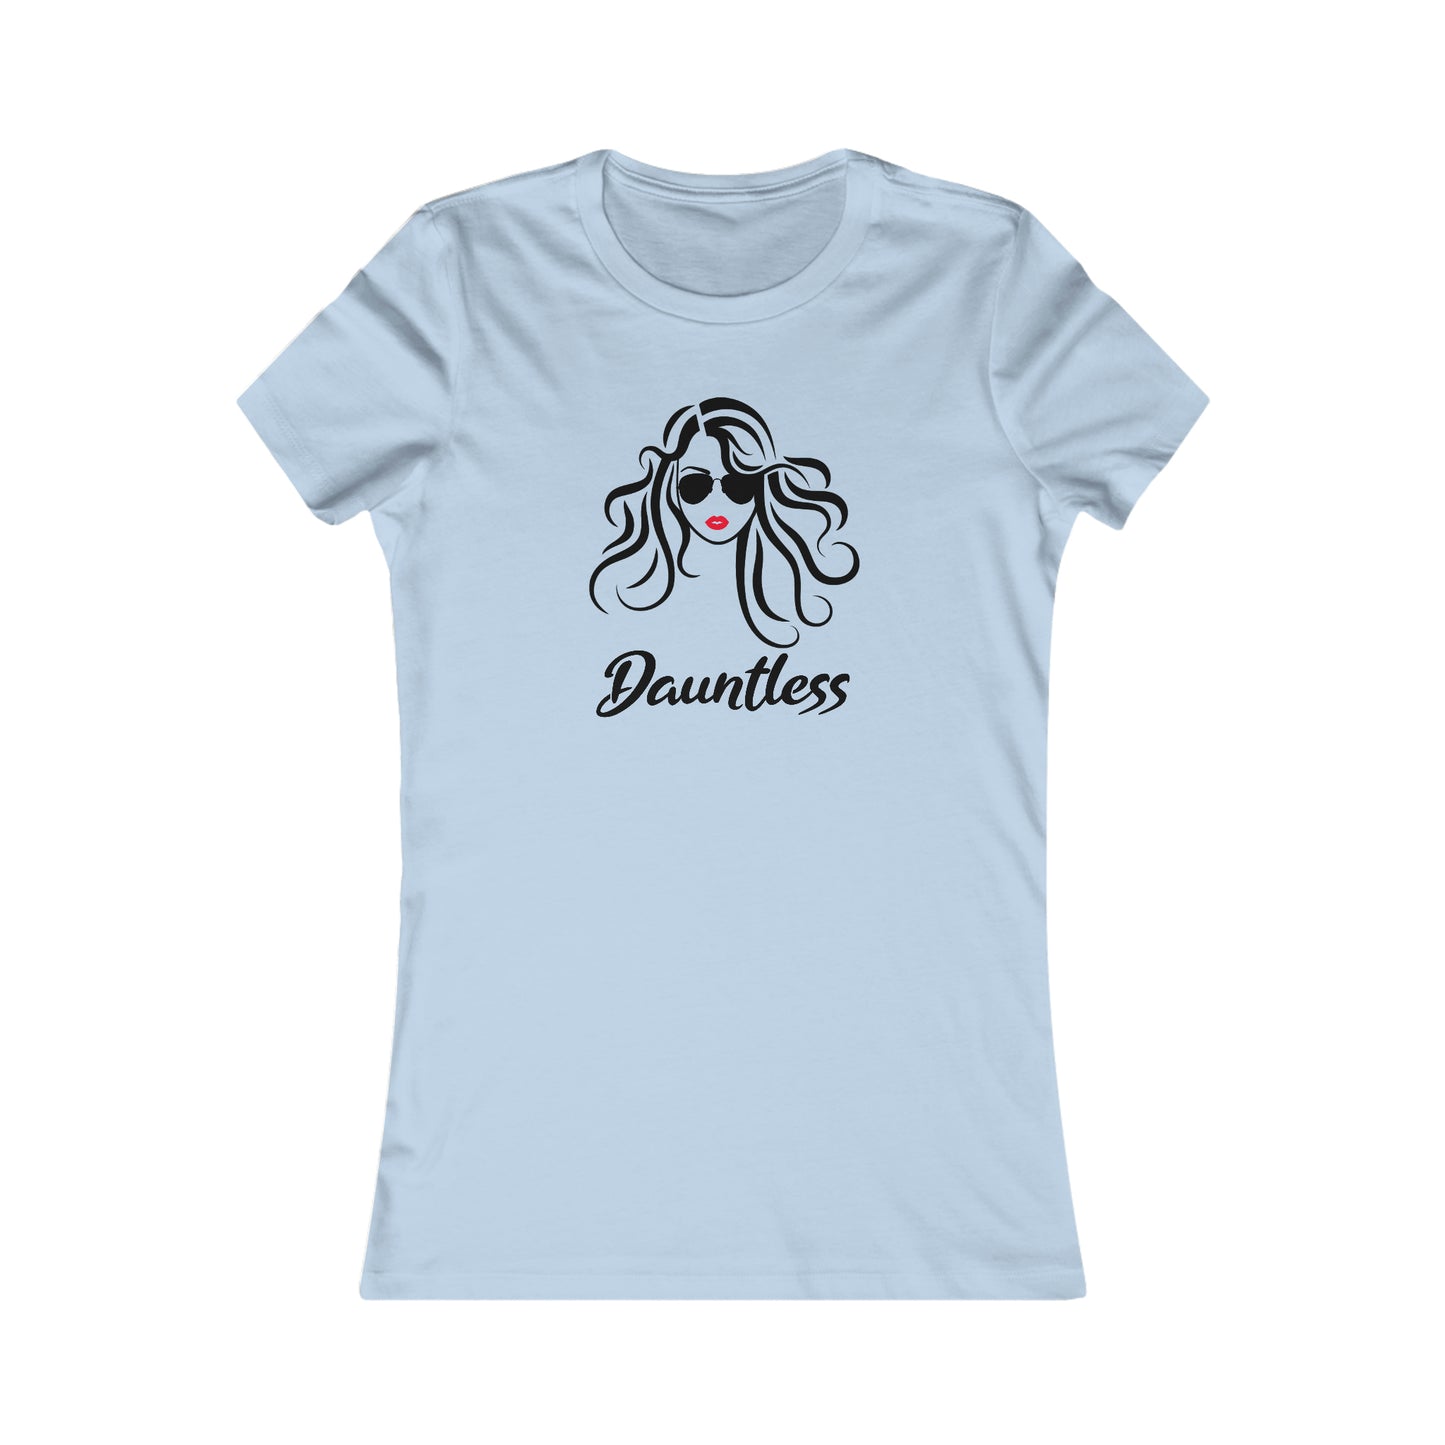 Dauntless T-Shirt For Brave TShirt For Tough Girl T Shirt For Fearless Woman T-Shirt For Determined Shirt For Girls TShirt For Gift